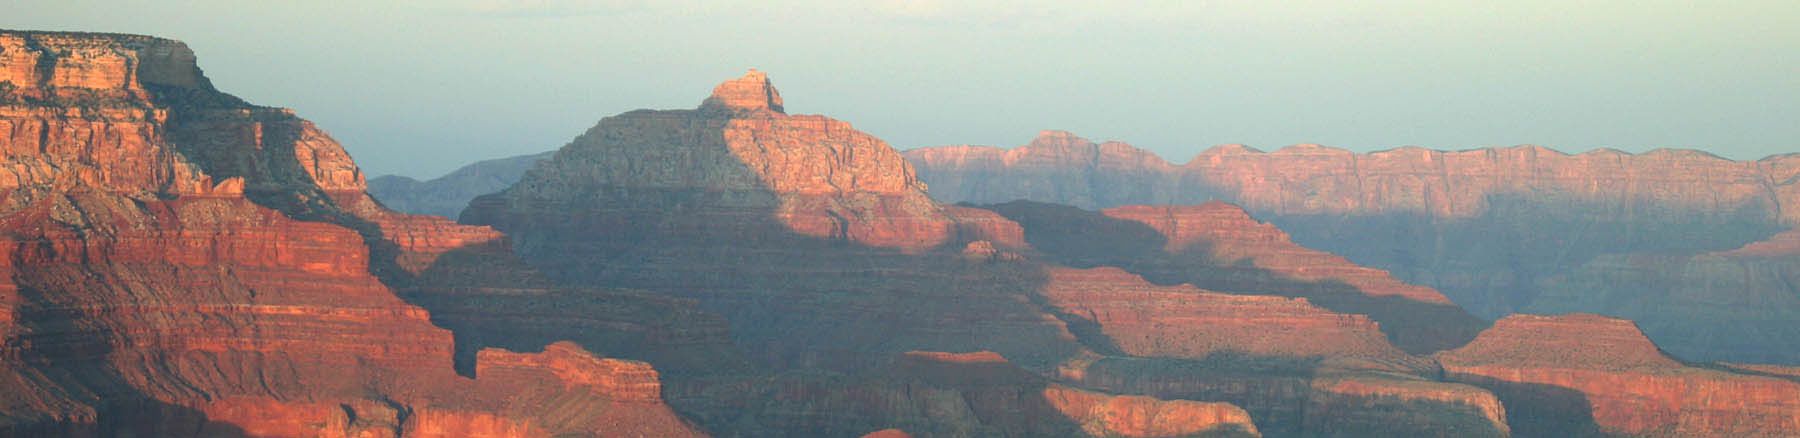 Grand_Canyon-public_domain_via_Frisvold